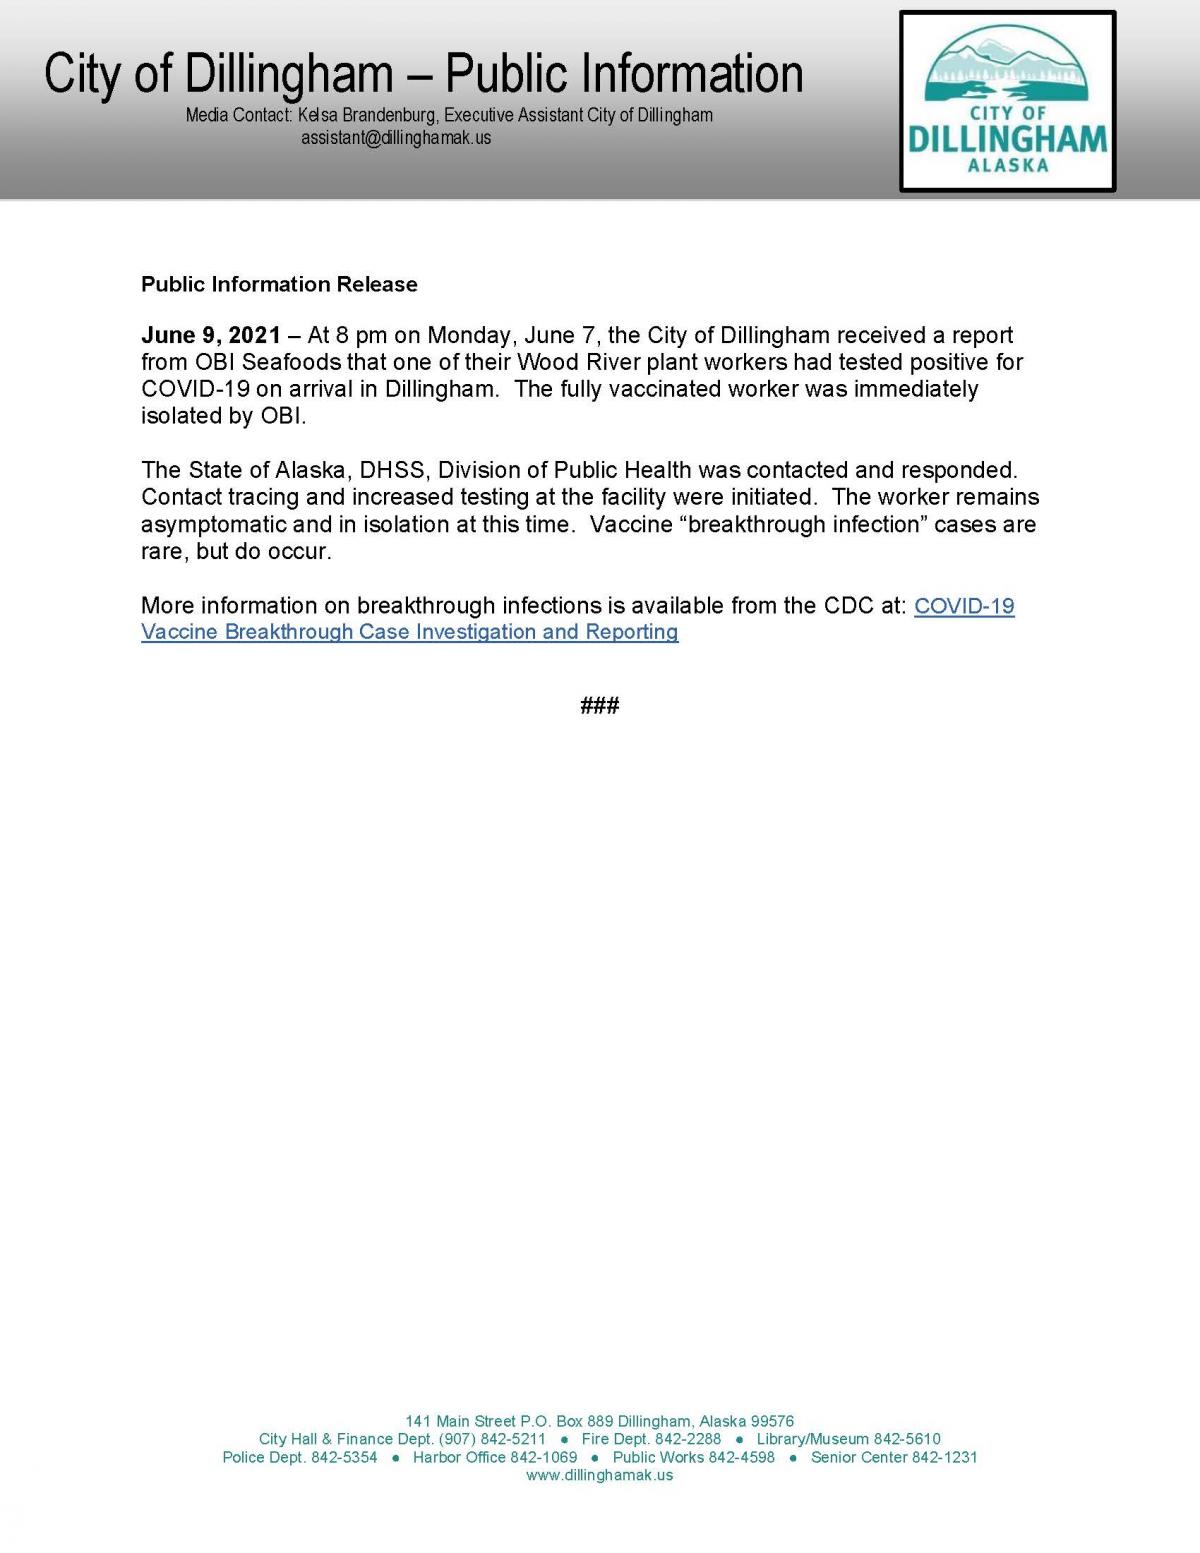 06.09.21 City of Dillingham Public Information Release